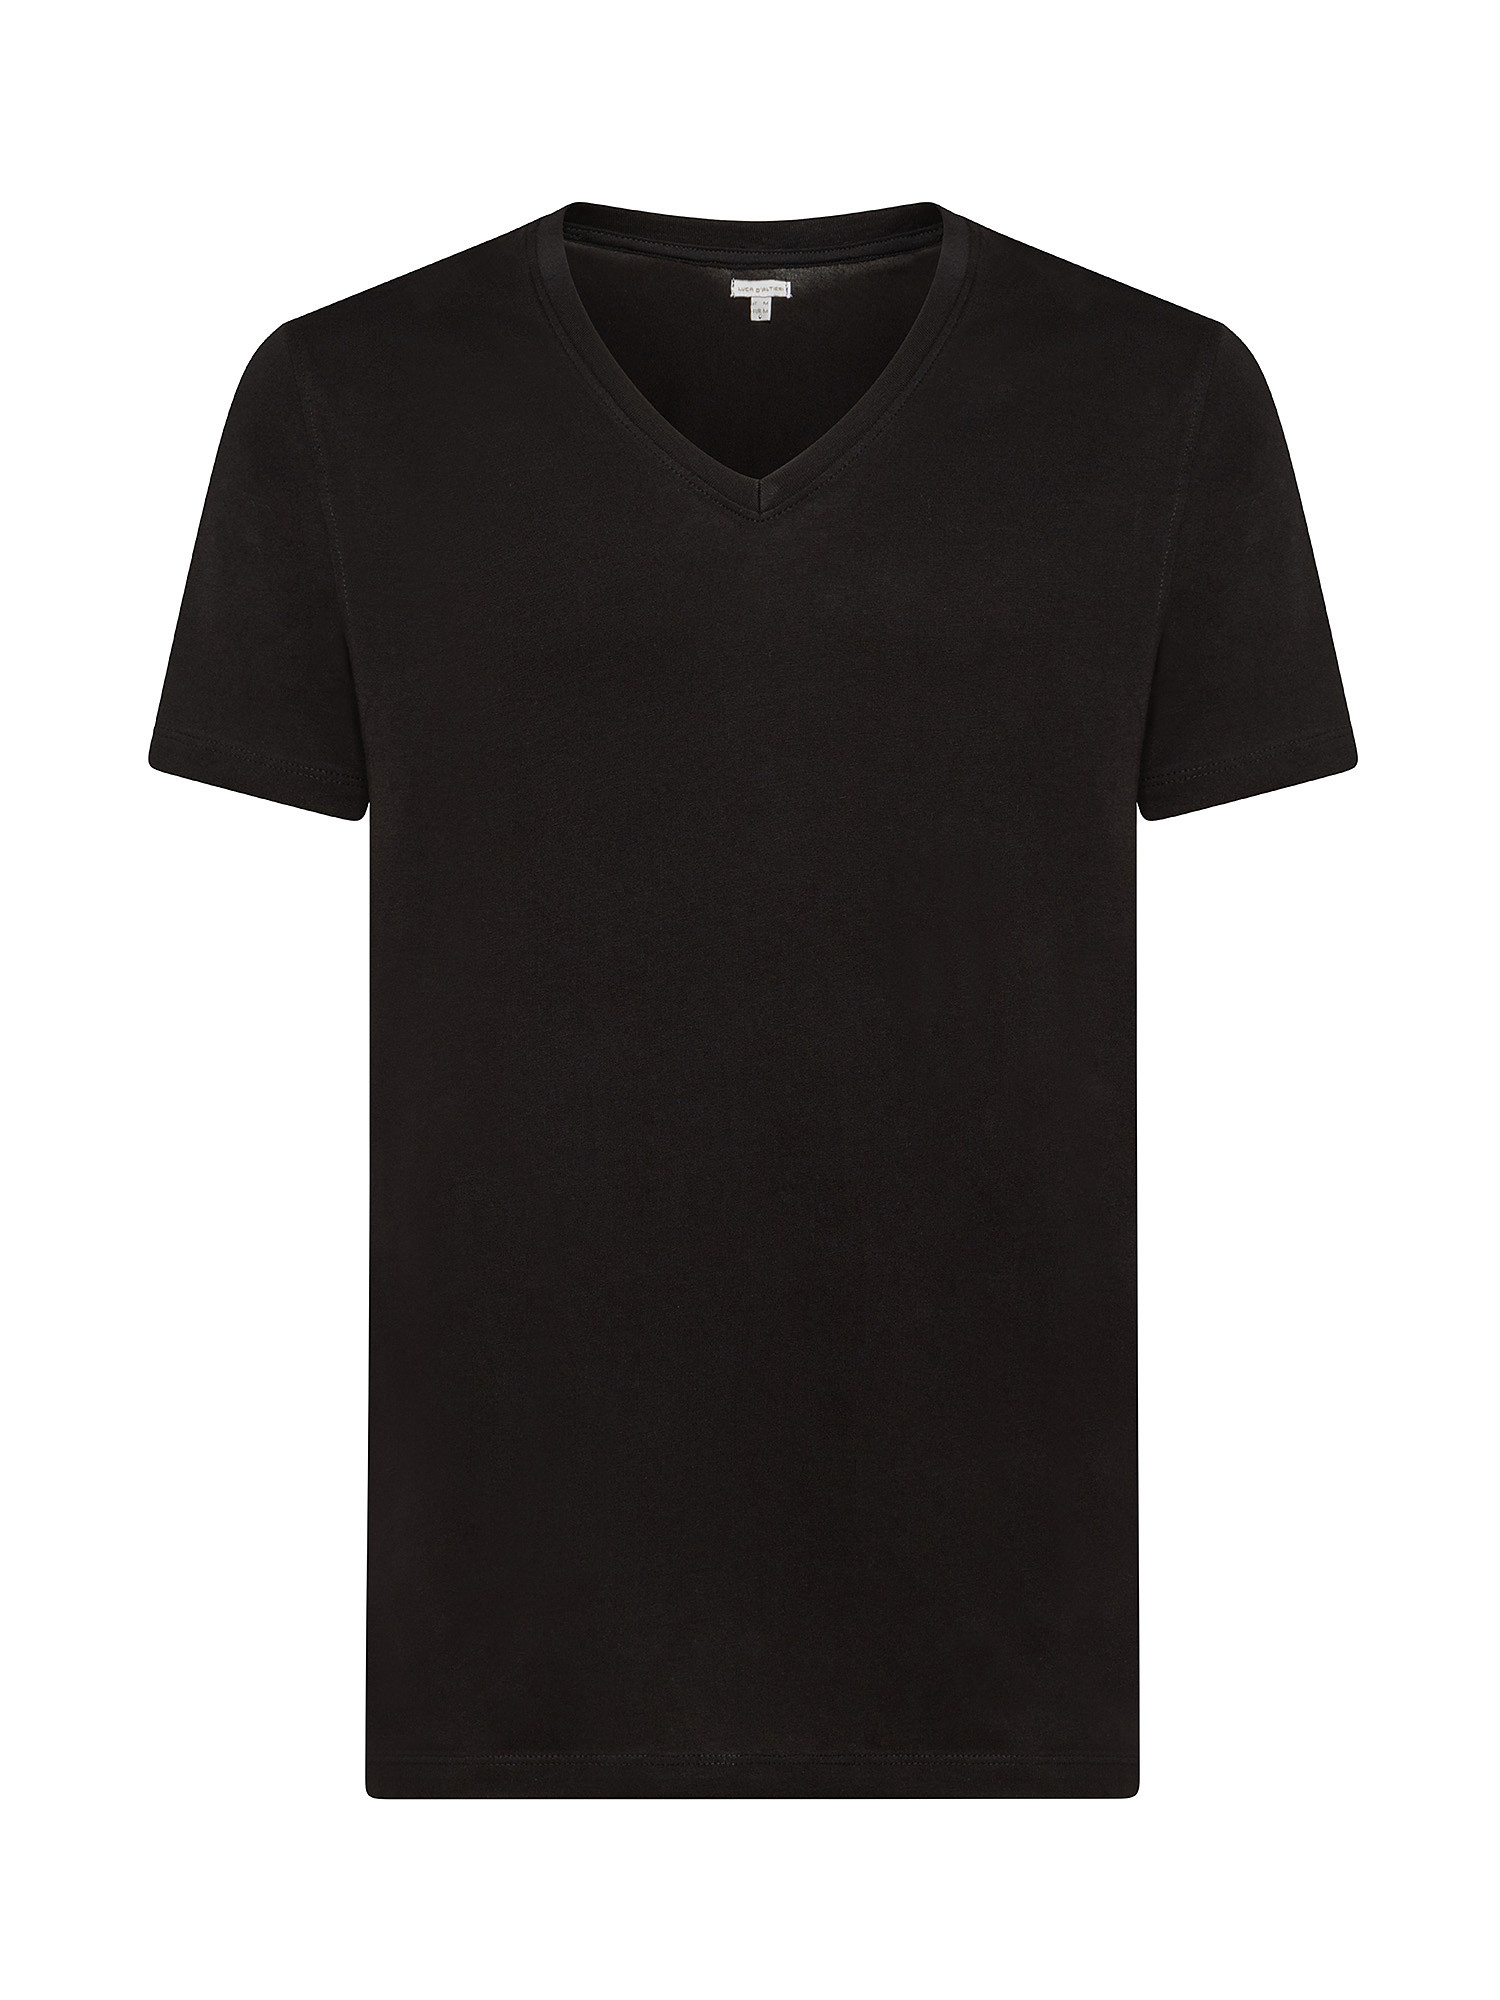 Luca D'Altieri - T-shirt scollo a V cotone supima, Nero, large image number 0